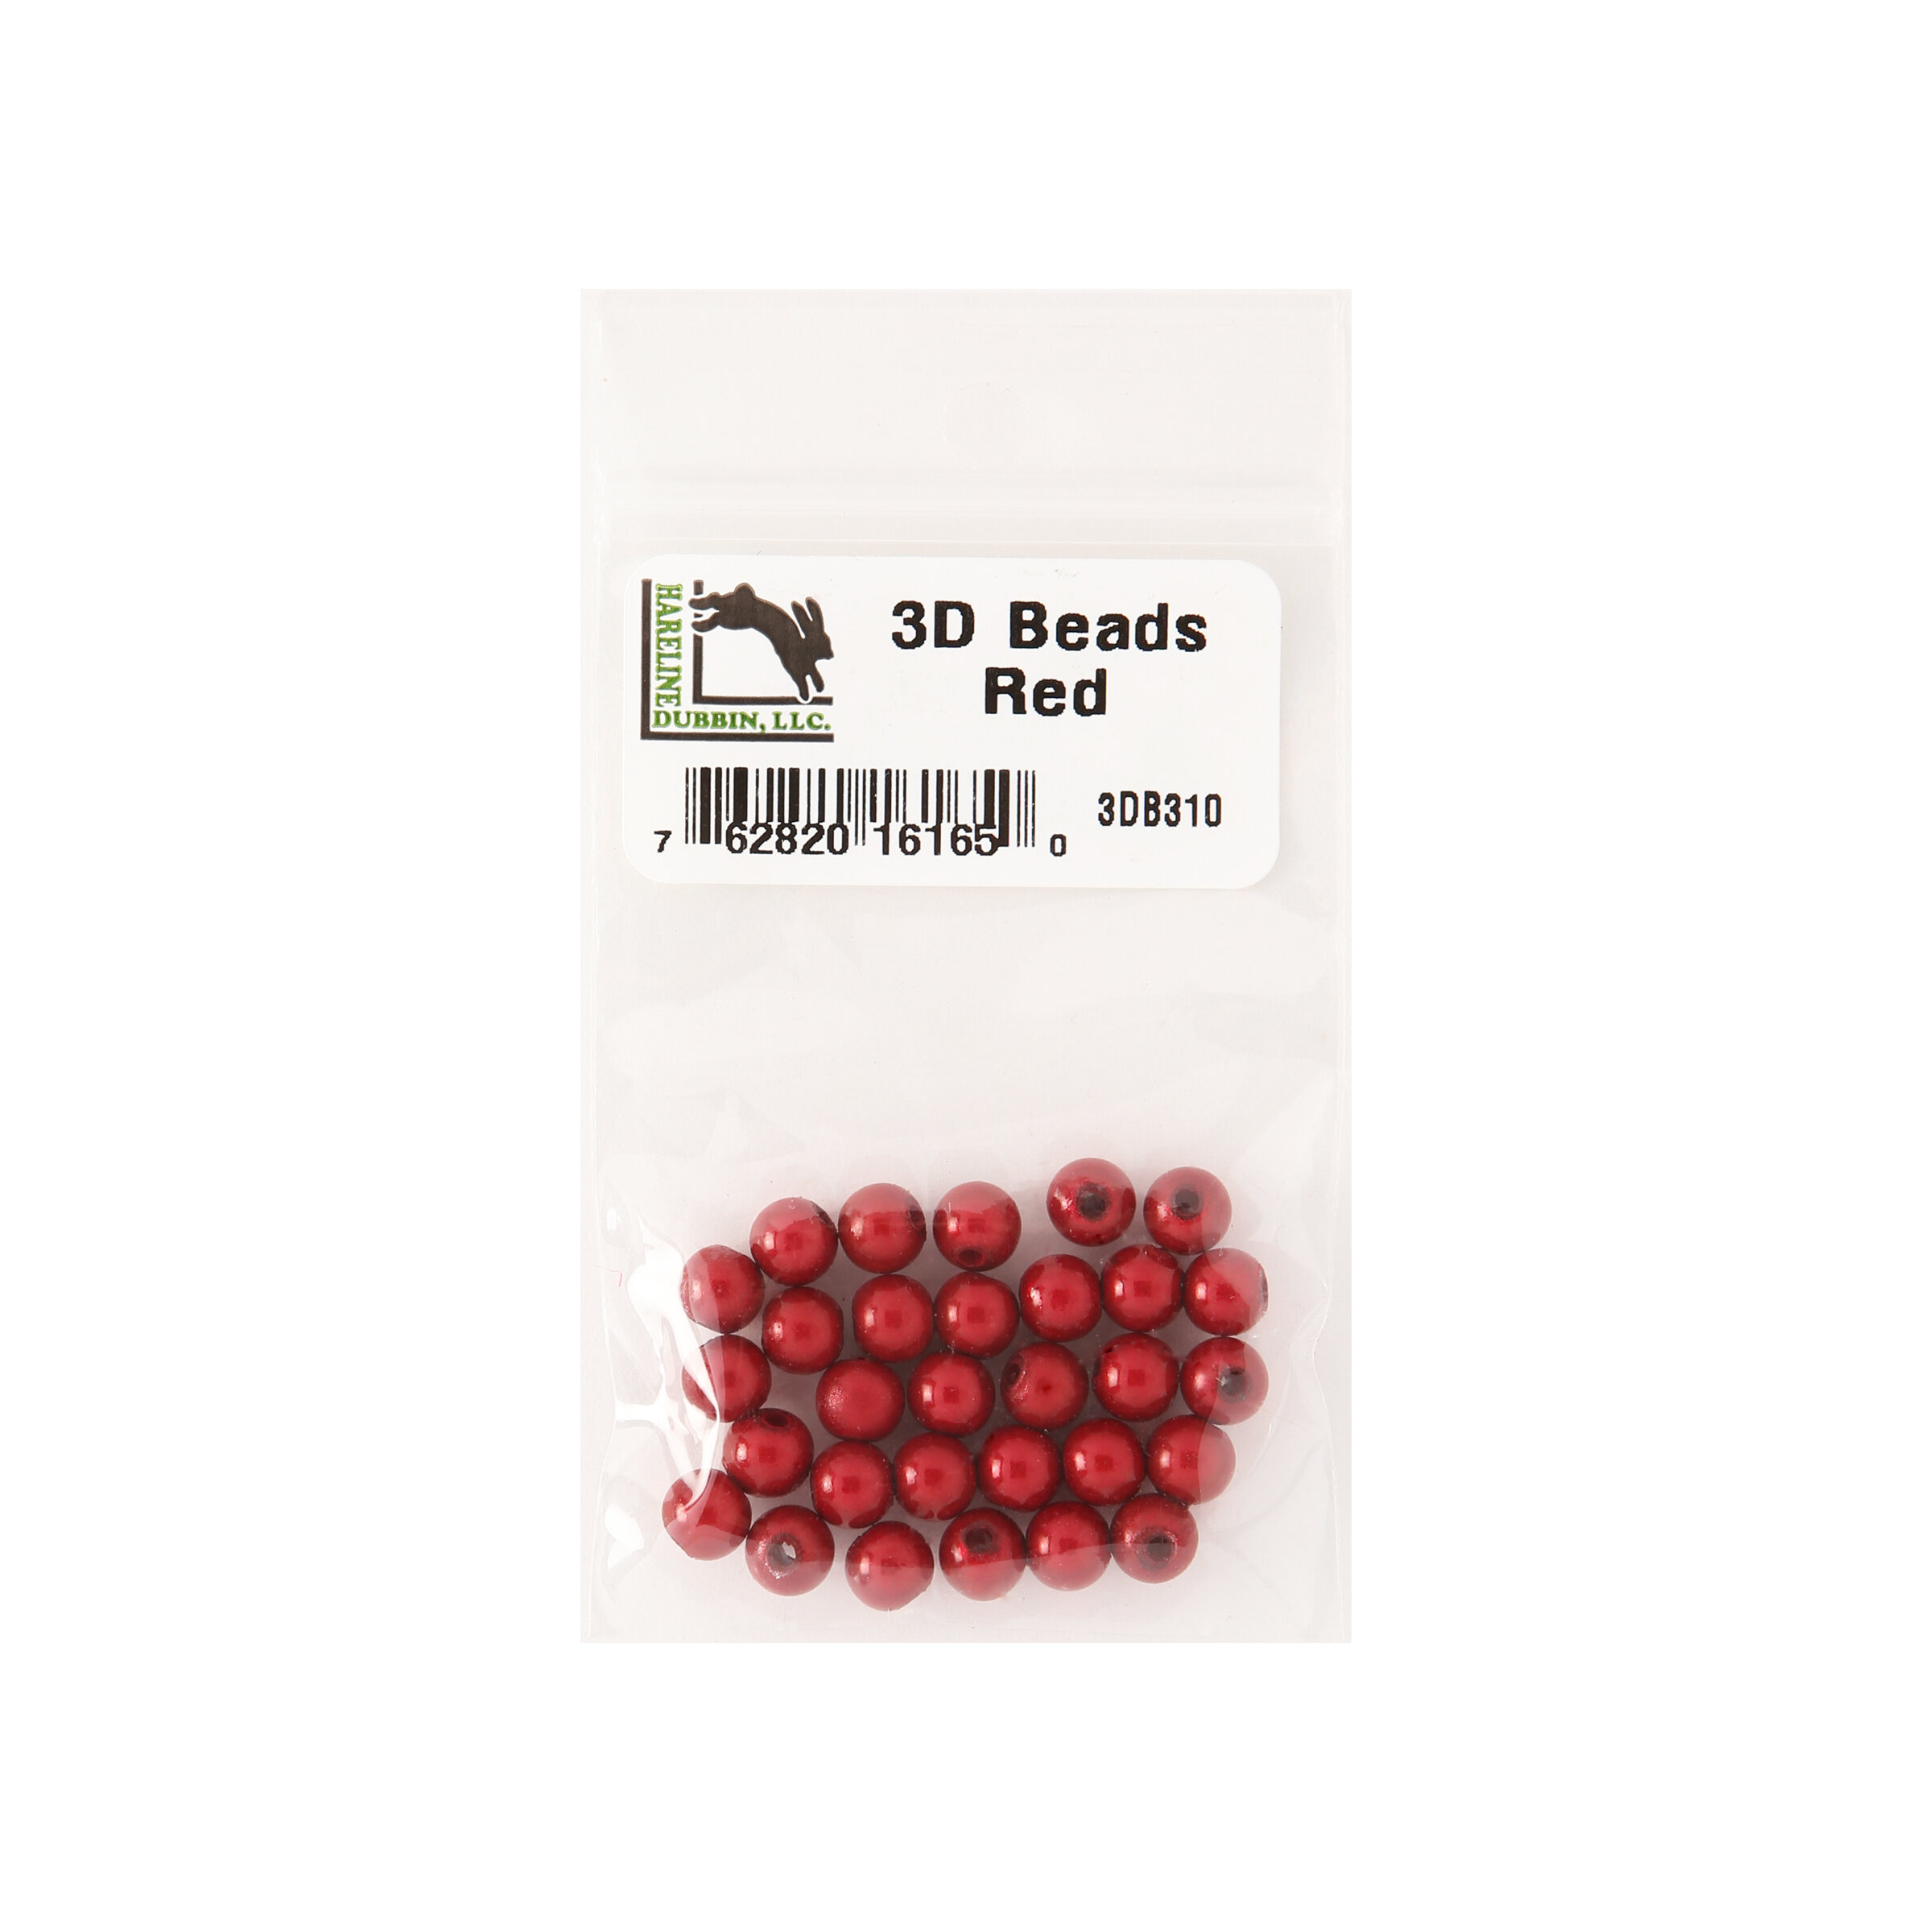 Hareline Dubbin 3D Beads